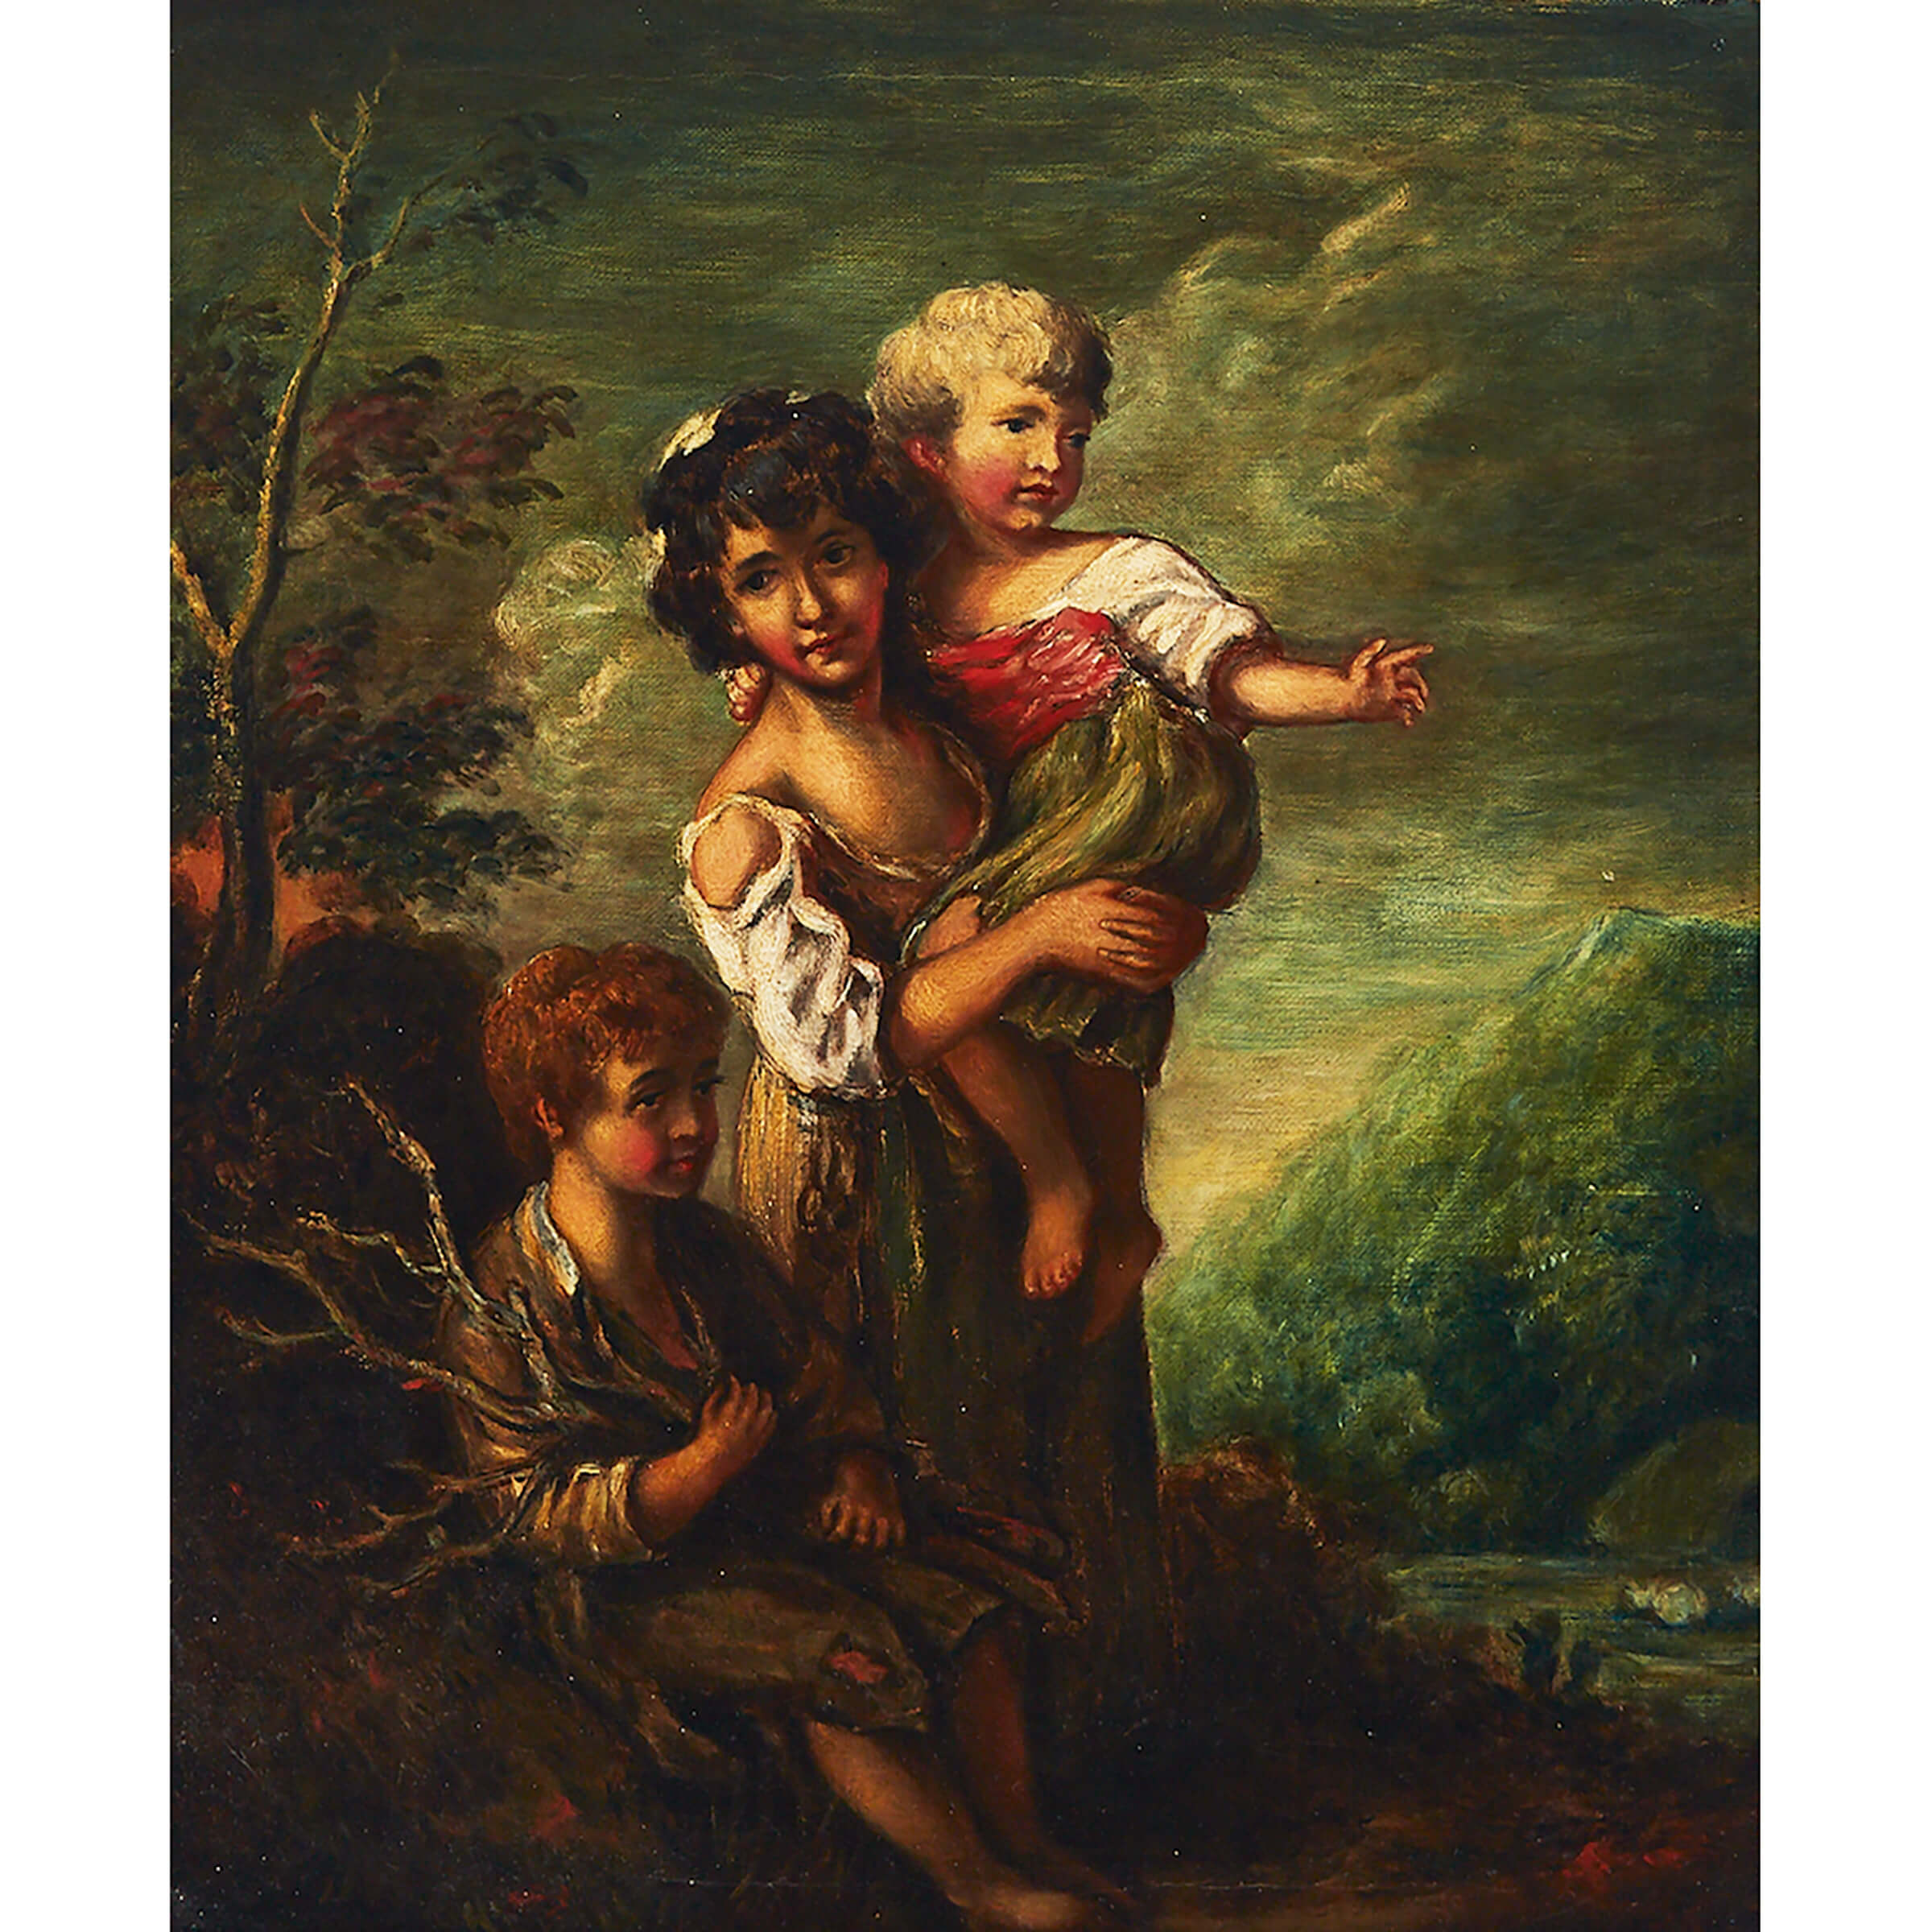 After Thomas Gainsborough (1727-1788), British